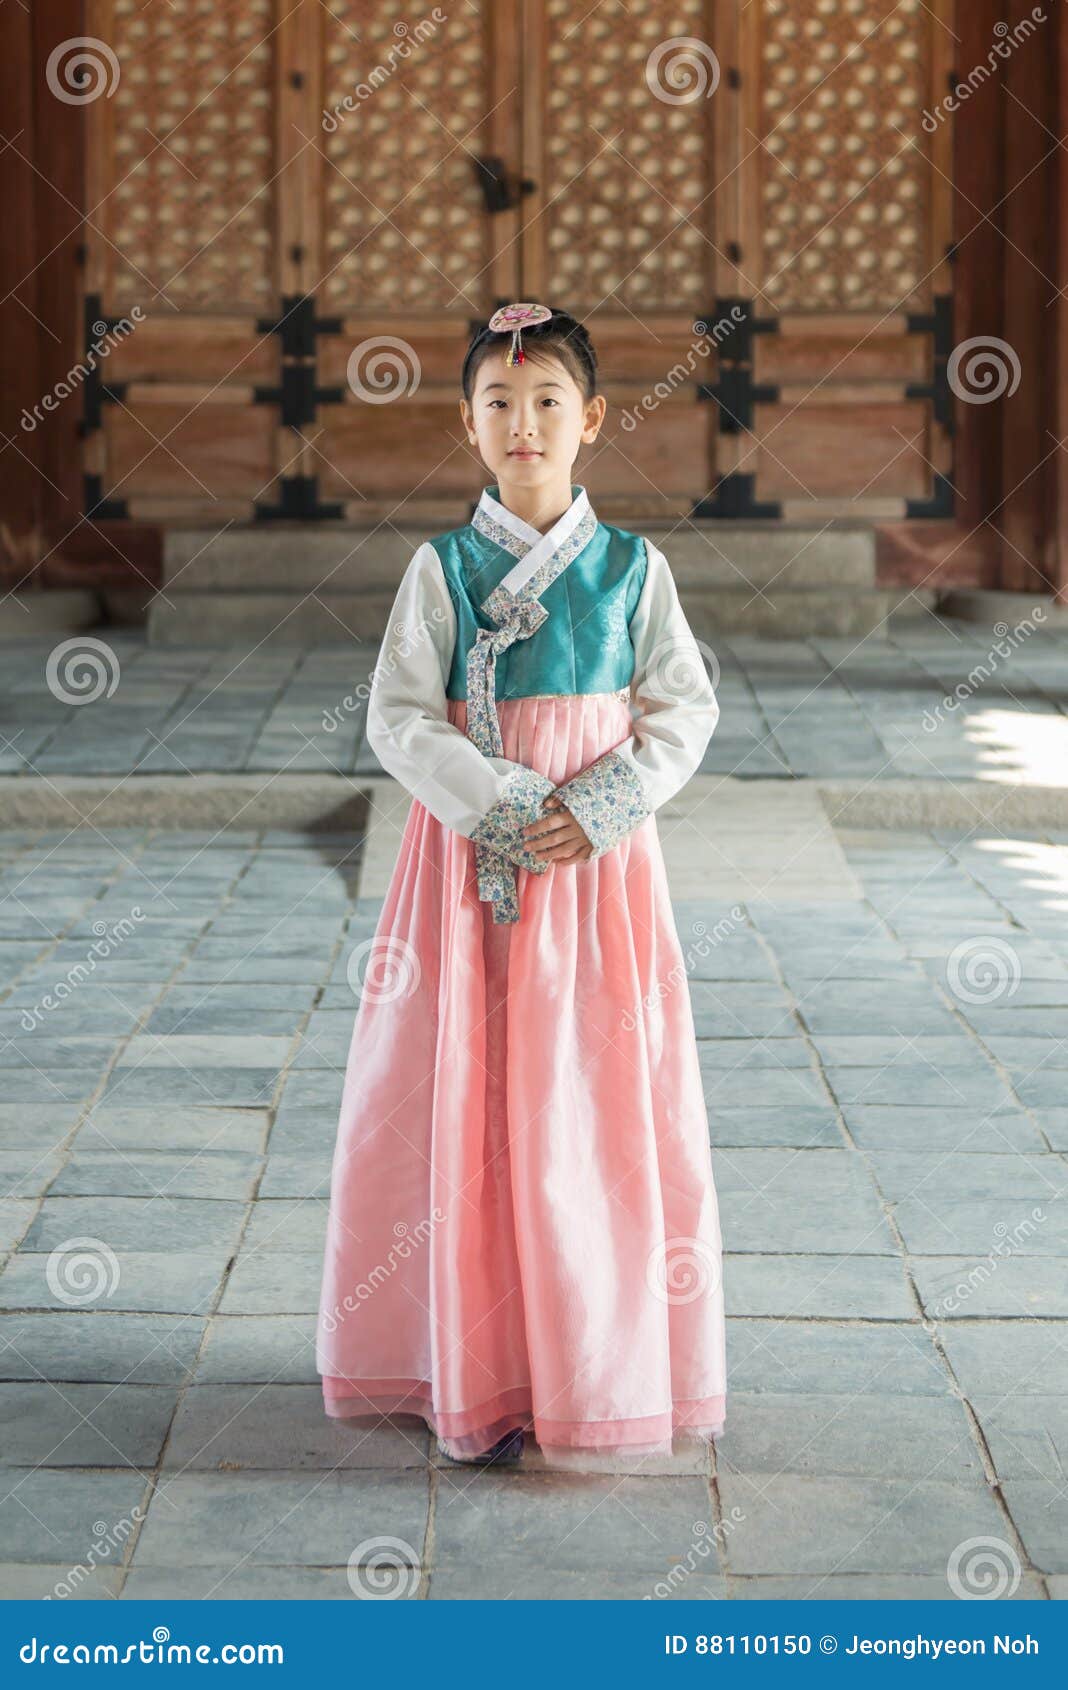 Korean Girl Wearing A Hanbok Wearing Pink Umbrella Beautiful Female Wearing Traditional  Korean Hanbok In Old Town Seoul Korea Stock Photo - Download Image Now -  iStock